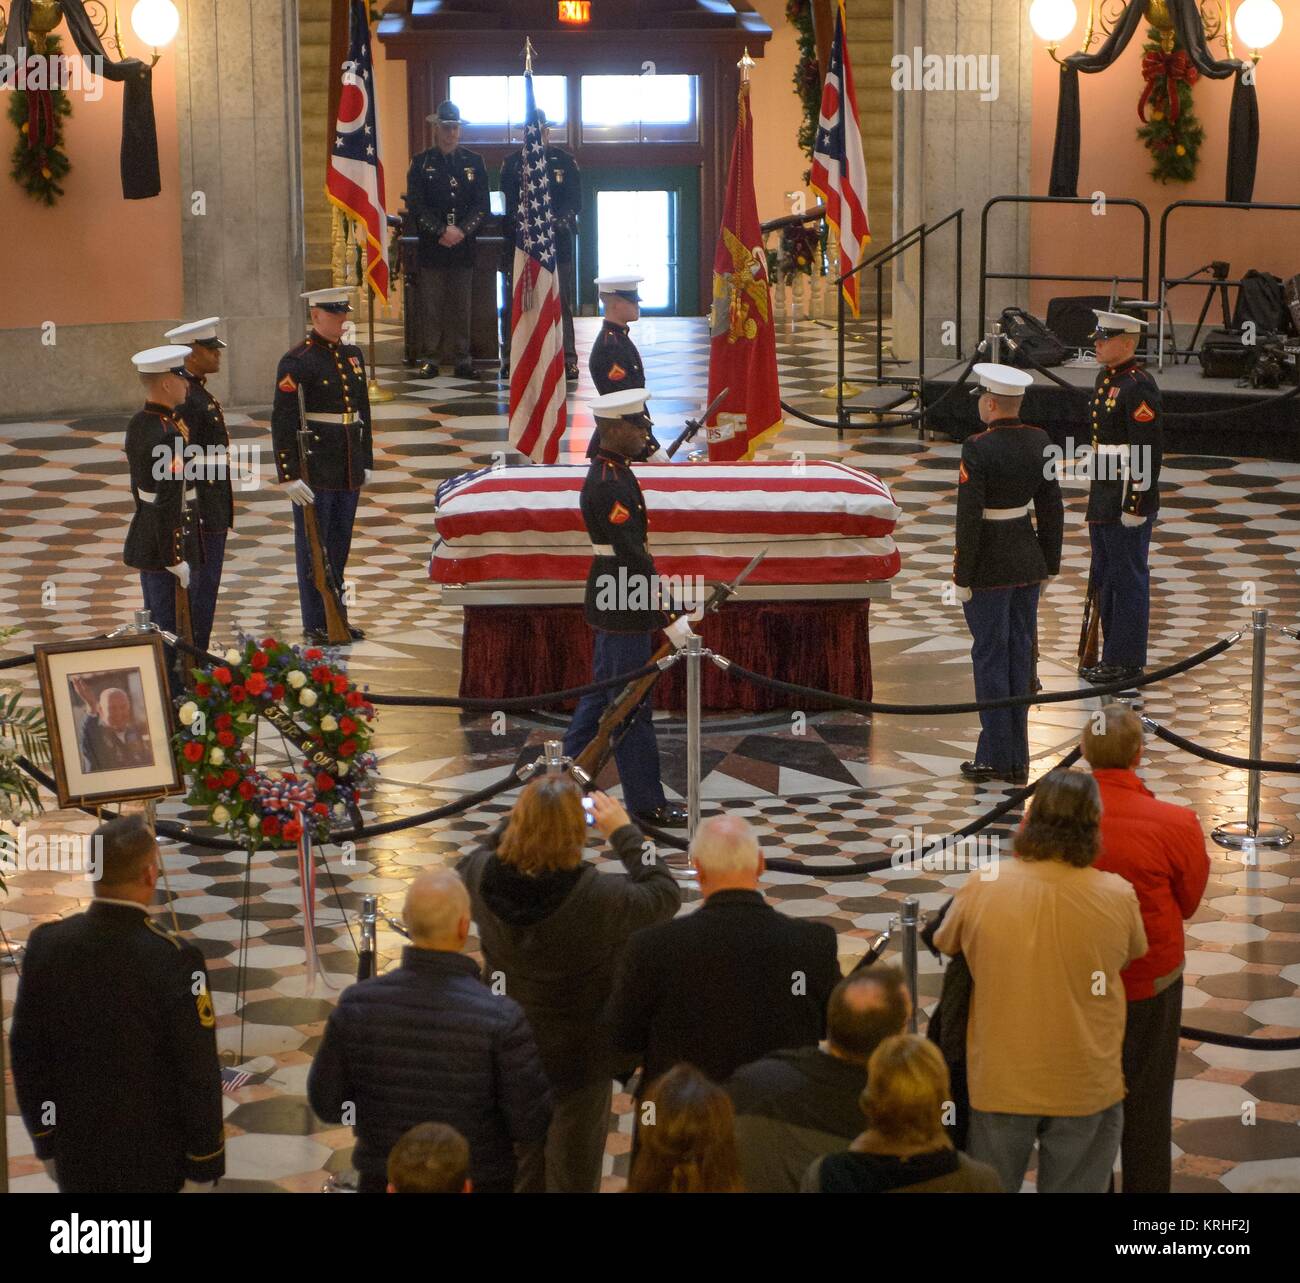 The U.S. Marine Honor Guard performs a Changing of the Guard around the casket of former NASA astronaut and U.S. Senator John Glenn at the Ohio Statehouse Rotunda December 16, 2016 in Columbus, Ohio. Stock Photo